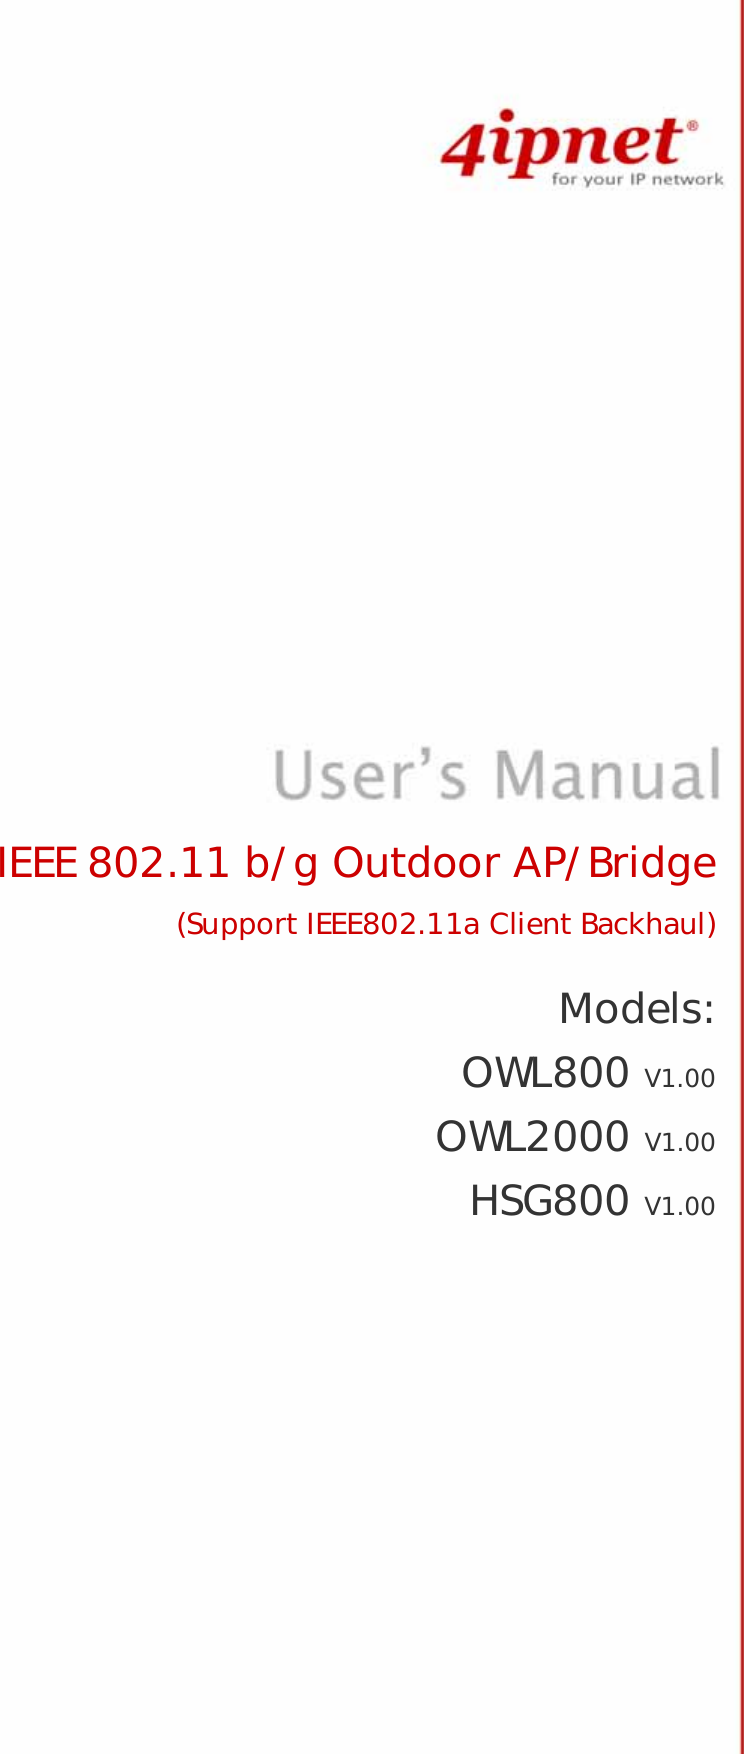                                   IEEE 802.11 b/g Outdoor AP/Bridge (Support IEEE802.11a Client Backhaul)  Models: OWL800 V1.00 OWL2000 V1.00 HSG800 V1.00  